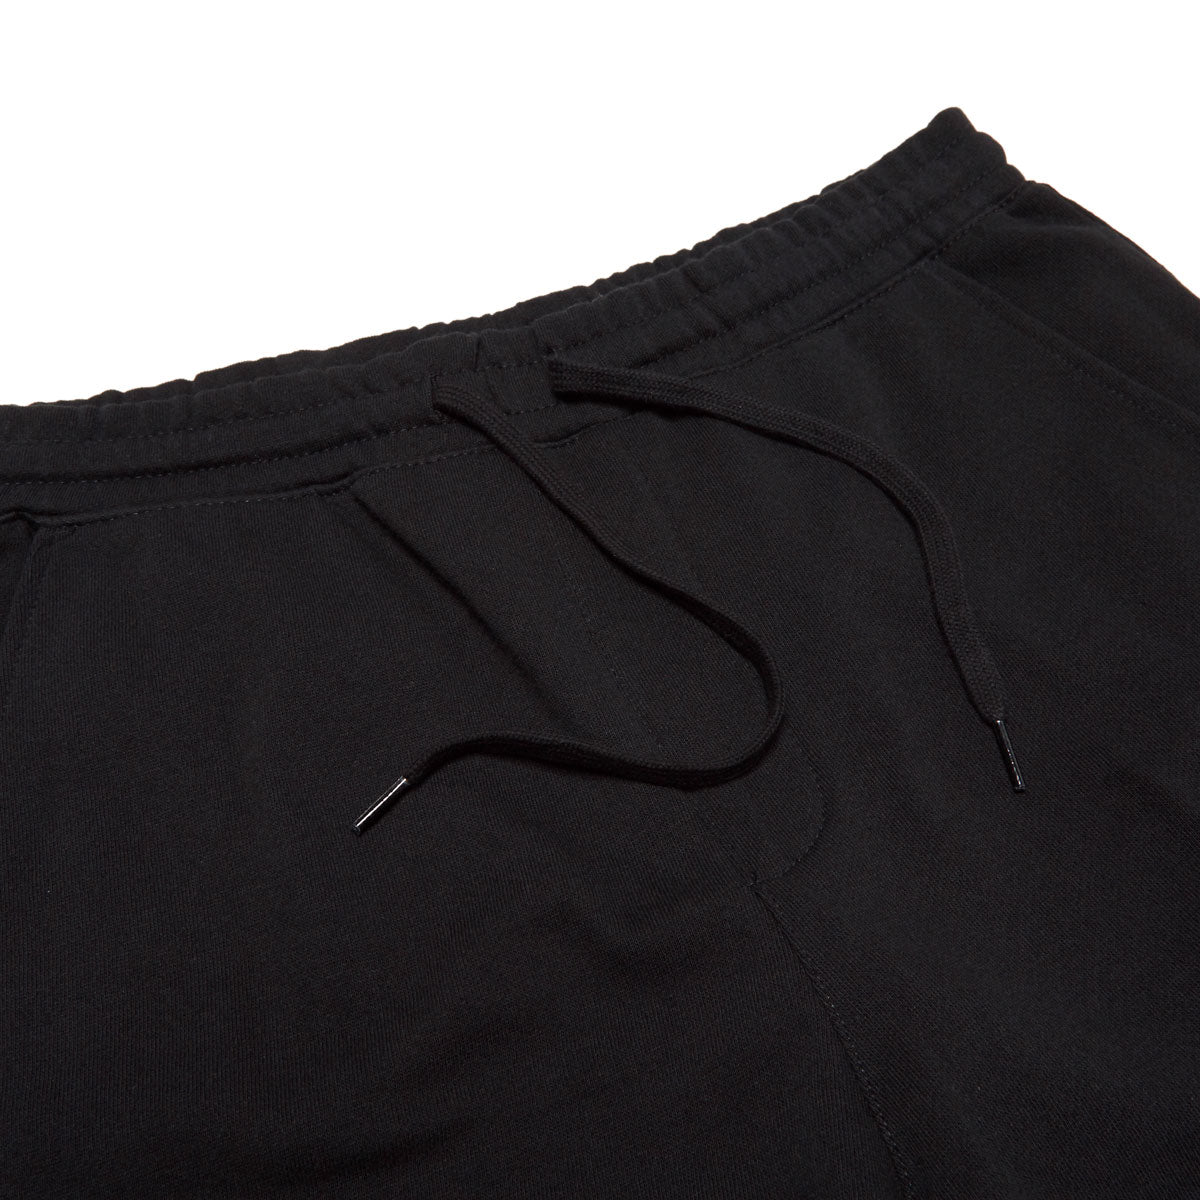 CCS Logo Rubber Patch Sweat Shorts - Black image 3